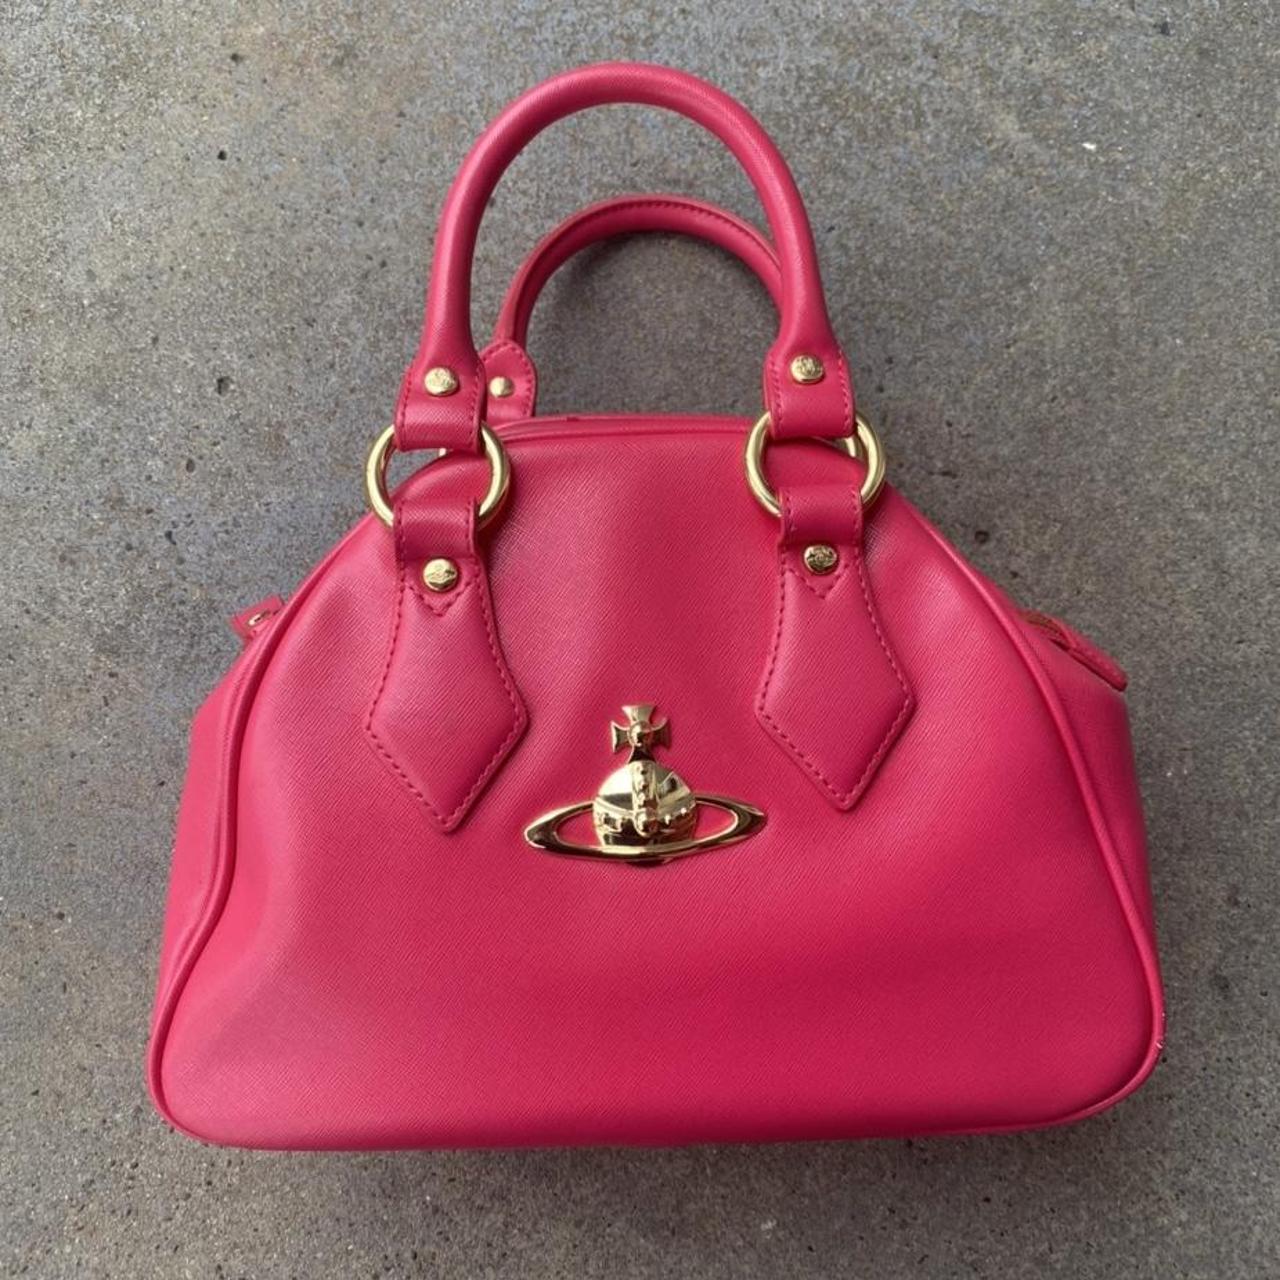 Vivienne Westwood Anglomania Handbag Purse Hot Pink... - Depop